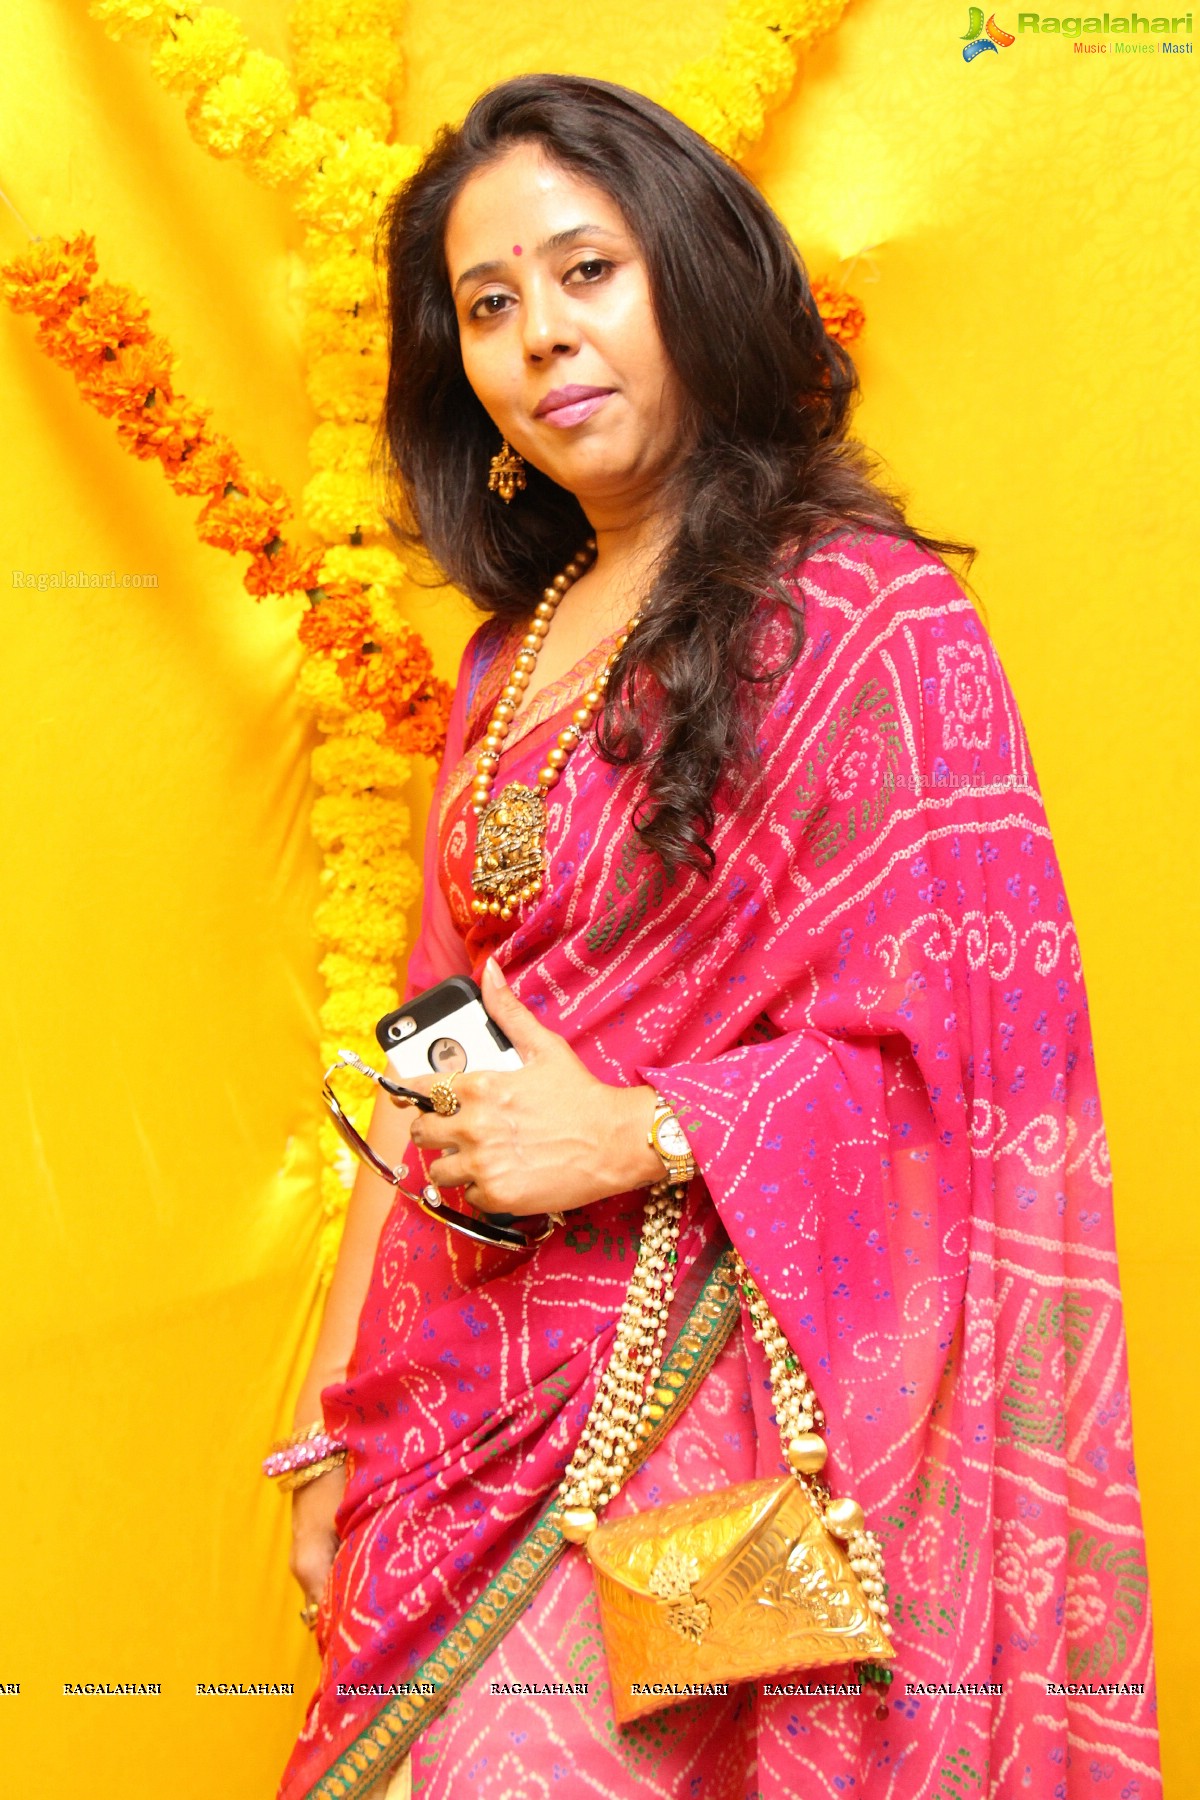 BWB Diwali Celebrations 2014 at Marigold, Hyderabad